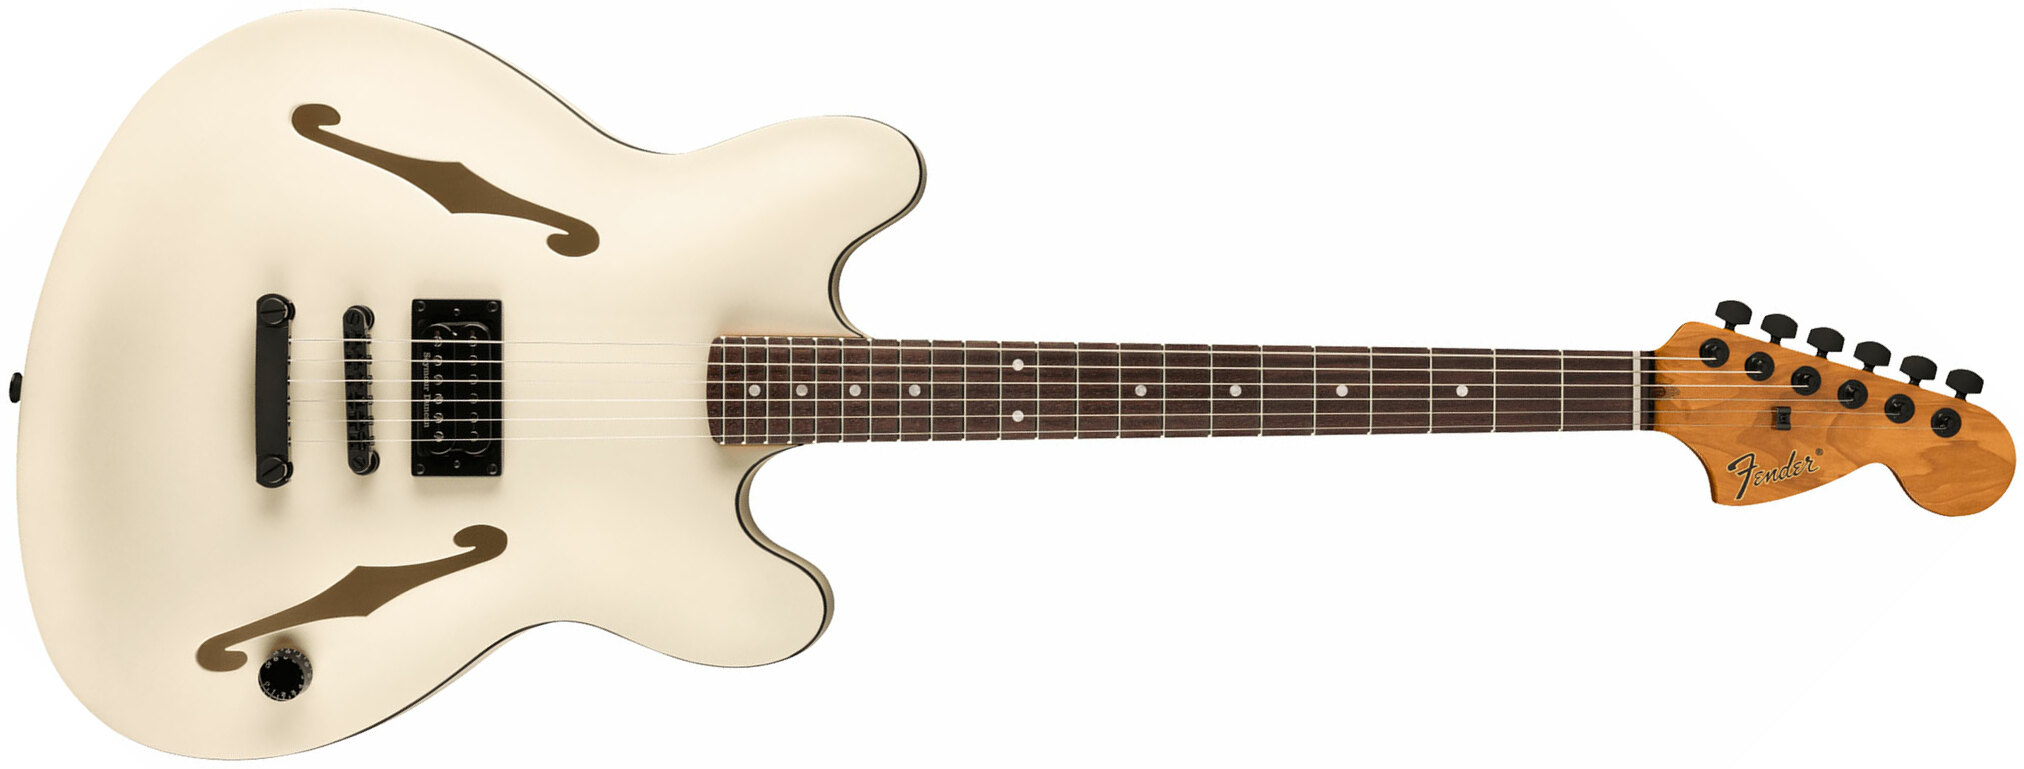 Fender Tom Delonge Starcaster Signature 1h Seymour Duncan Ht Rw - Satin Olympic White - Semi hollow elektriche gitaar - Main picture